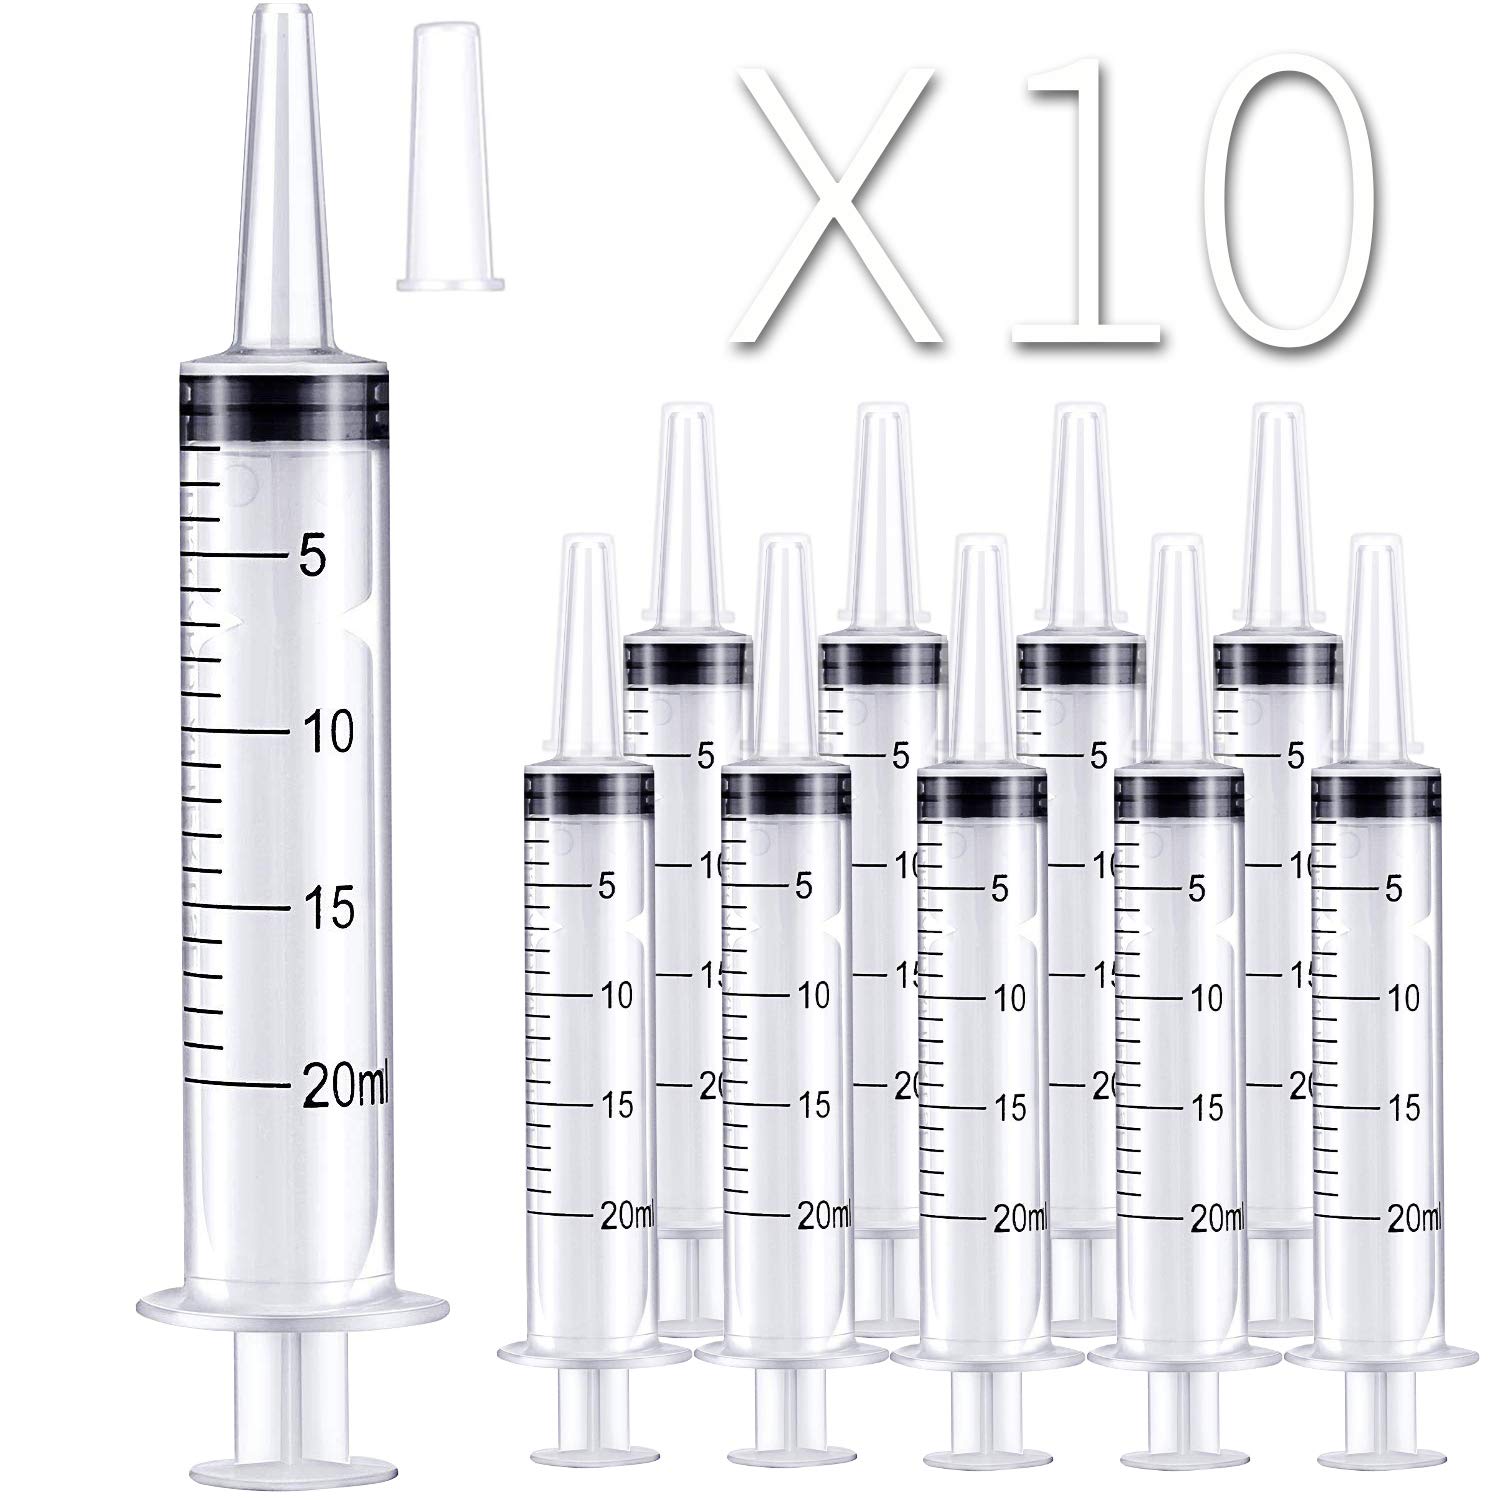 10 Pack Needleless Plastic Syringe Liquid Measuring Syringe For Epoxy  Resin, Crafts, Science Labs, Pet Feeding, Oil Or Glue Applicator (20+60ml)